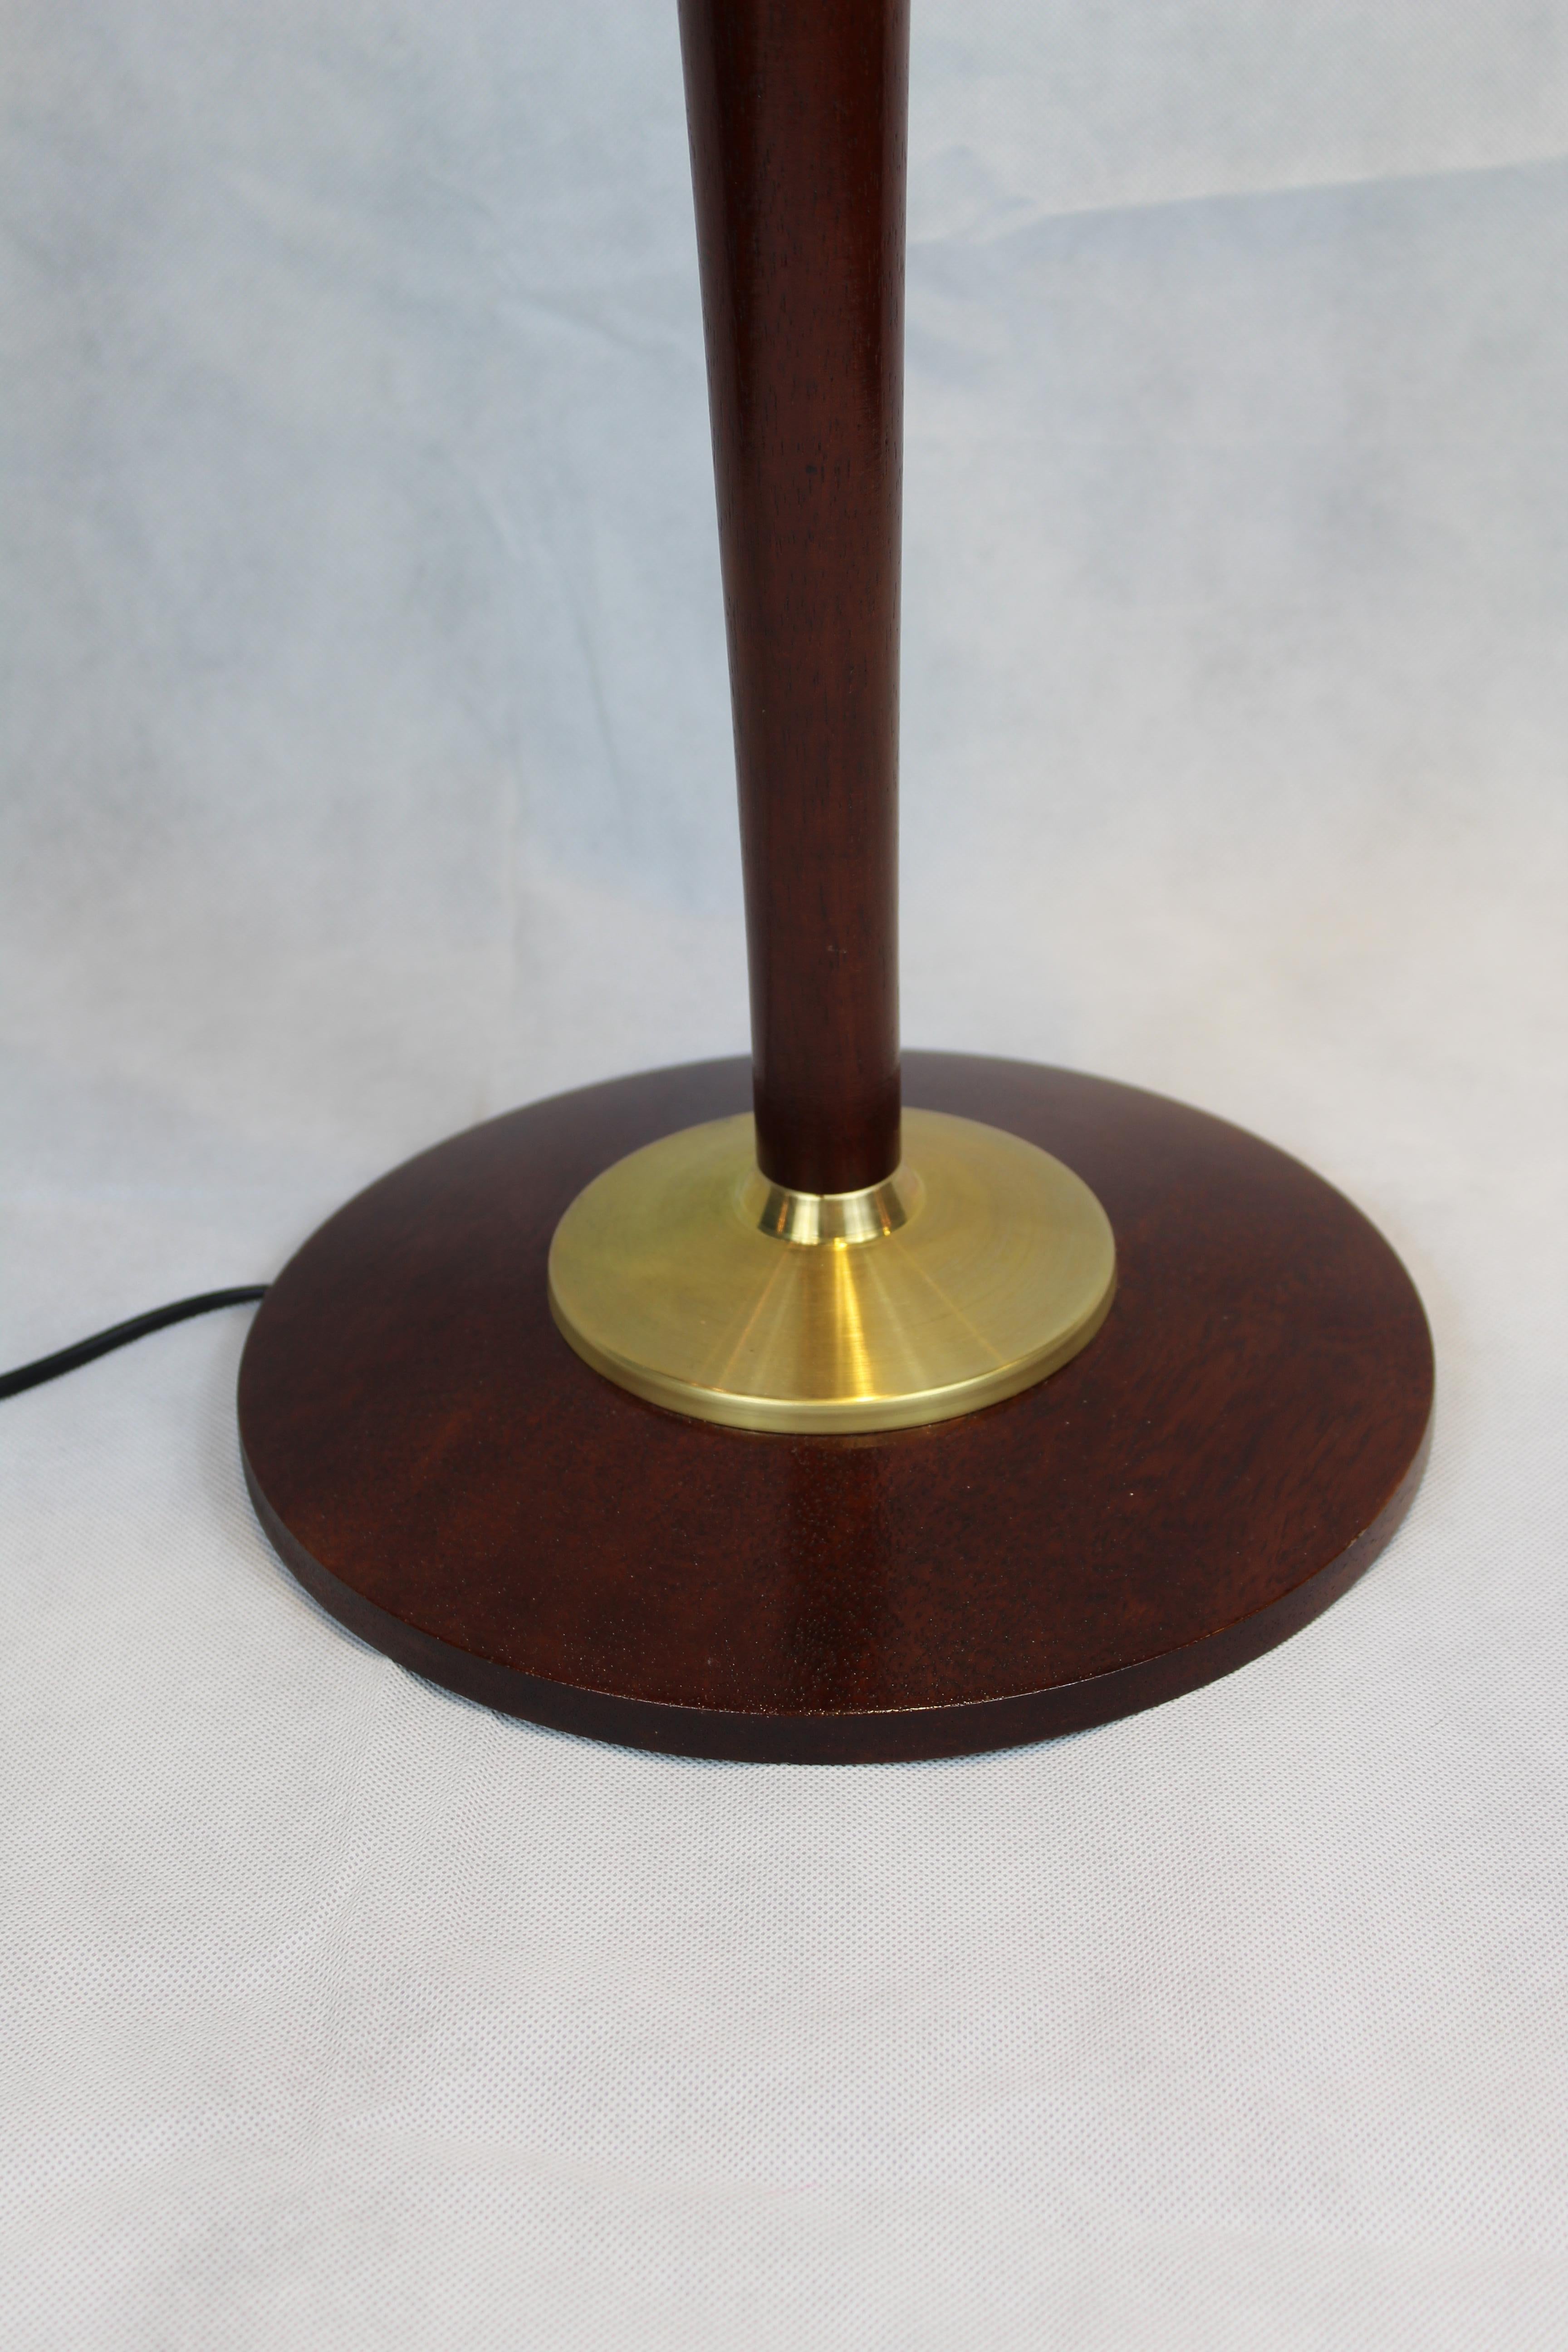 Mid-20th Century Italian Art Deco Table Lamp For Sale